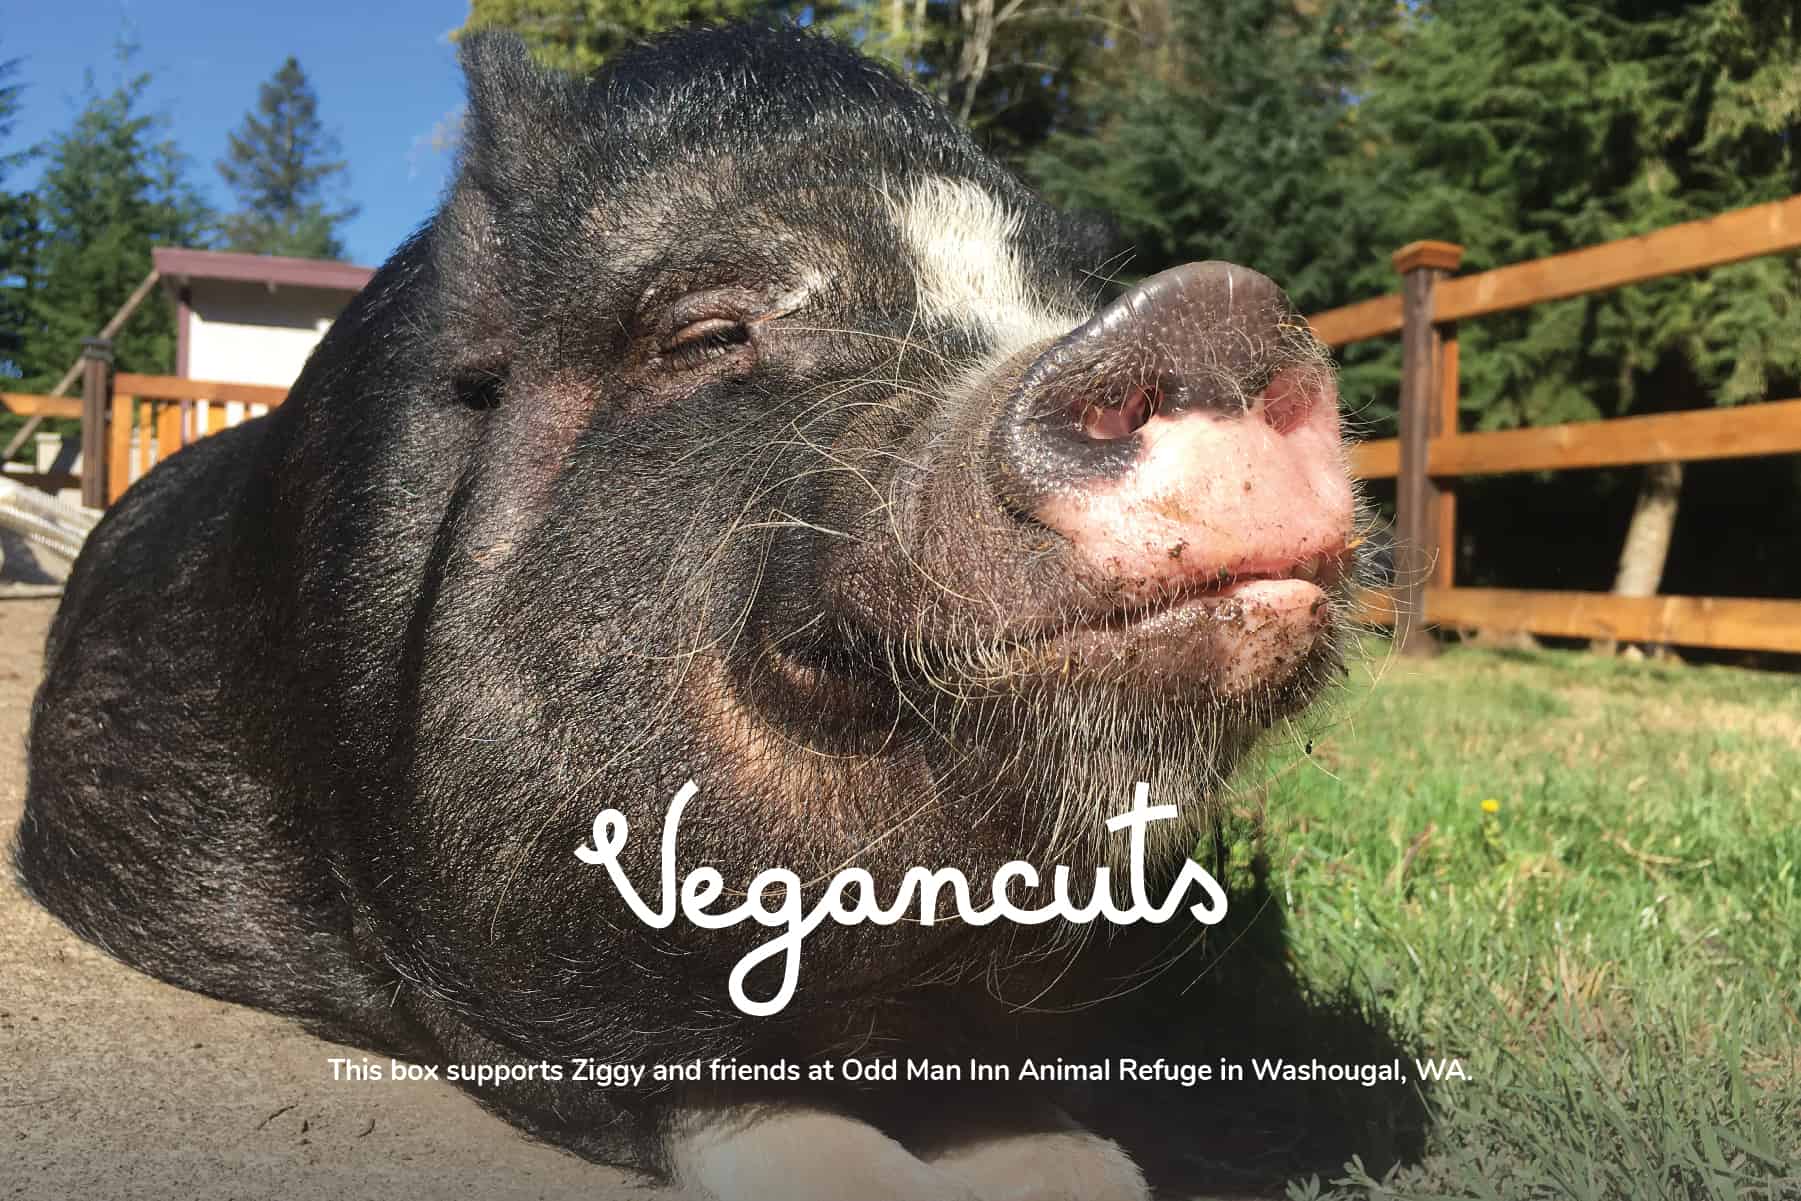 ziggy at Odd Man Inn Animal Refuge | Vegancuts Donation Program